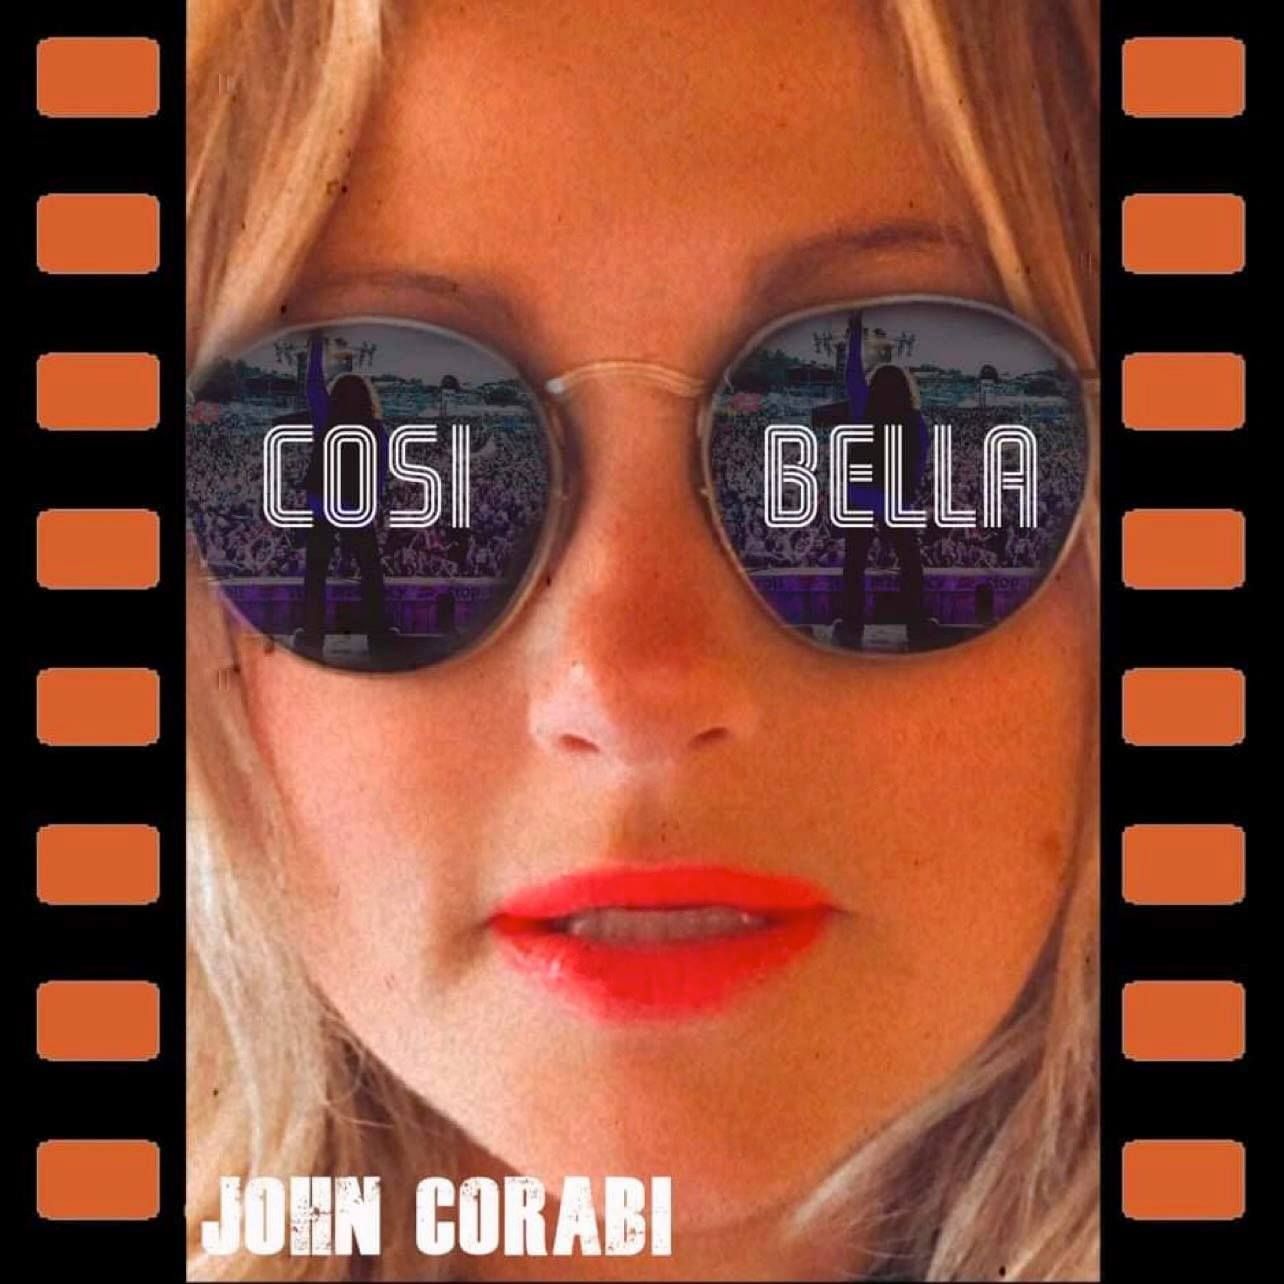 Ex-Sänger John Corabi veröffentlicht 'Cosi Bella (So Beautiful)'-Single